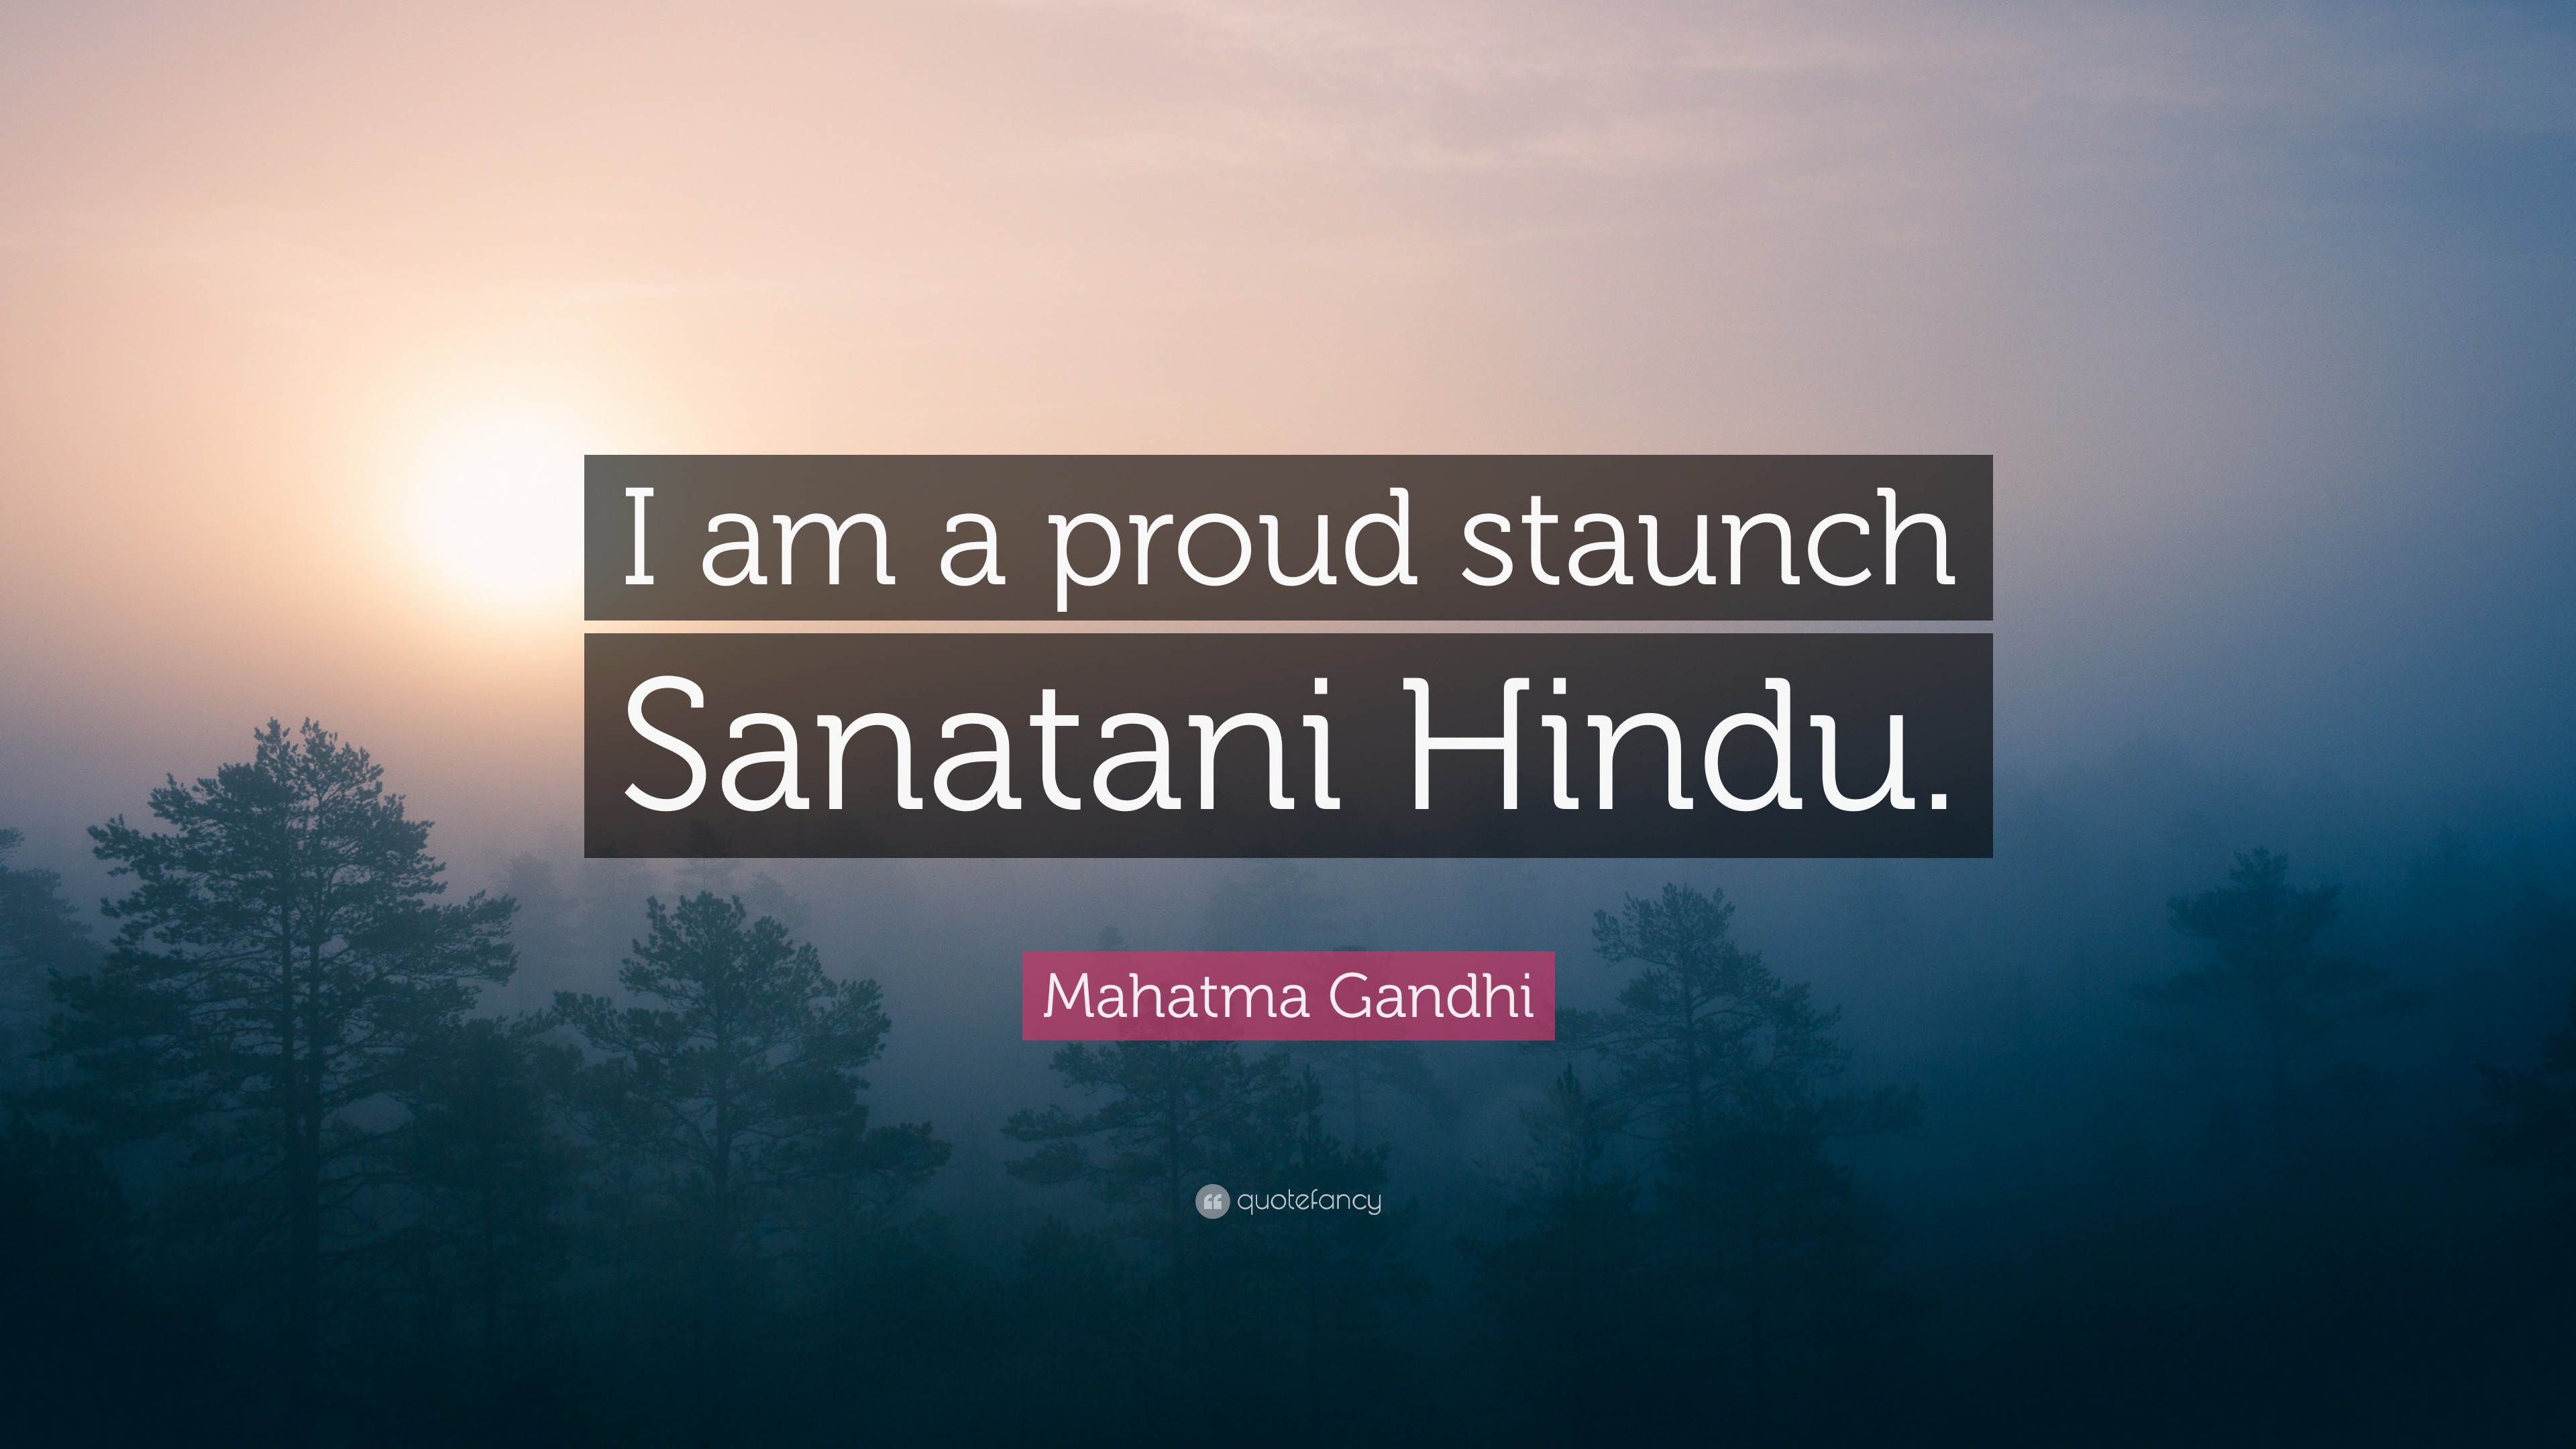 Mahatma Gandhi Quote: “I am a proud staunch Sanatani Hindu.”